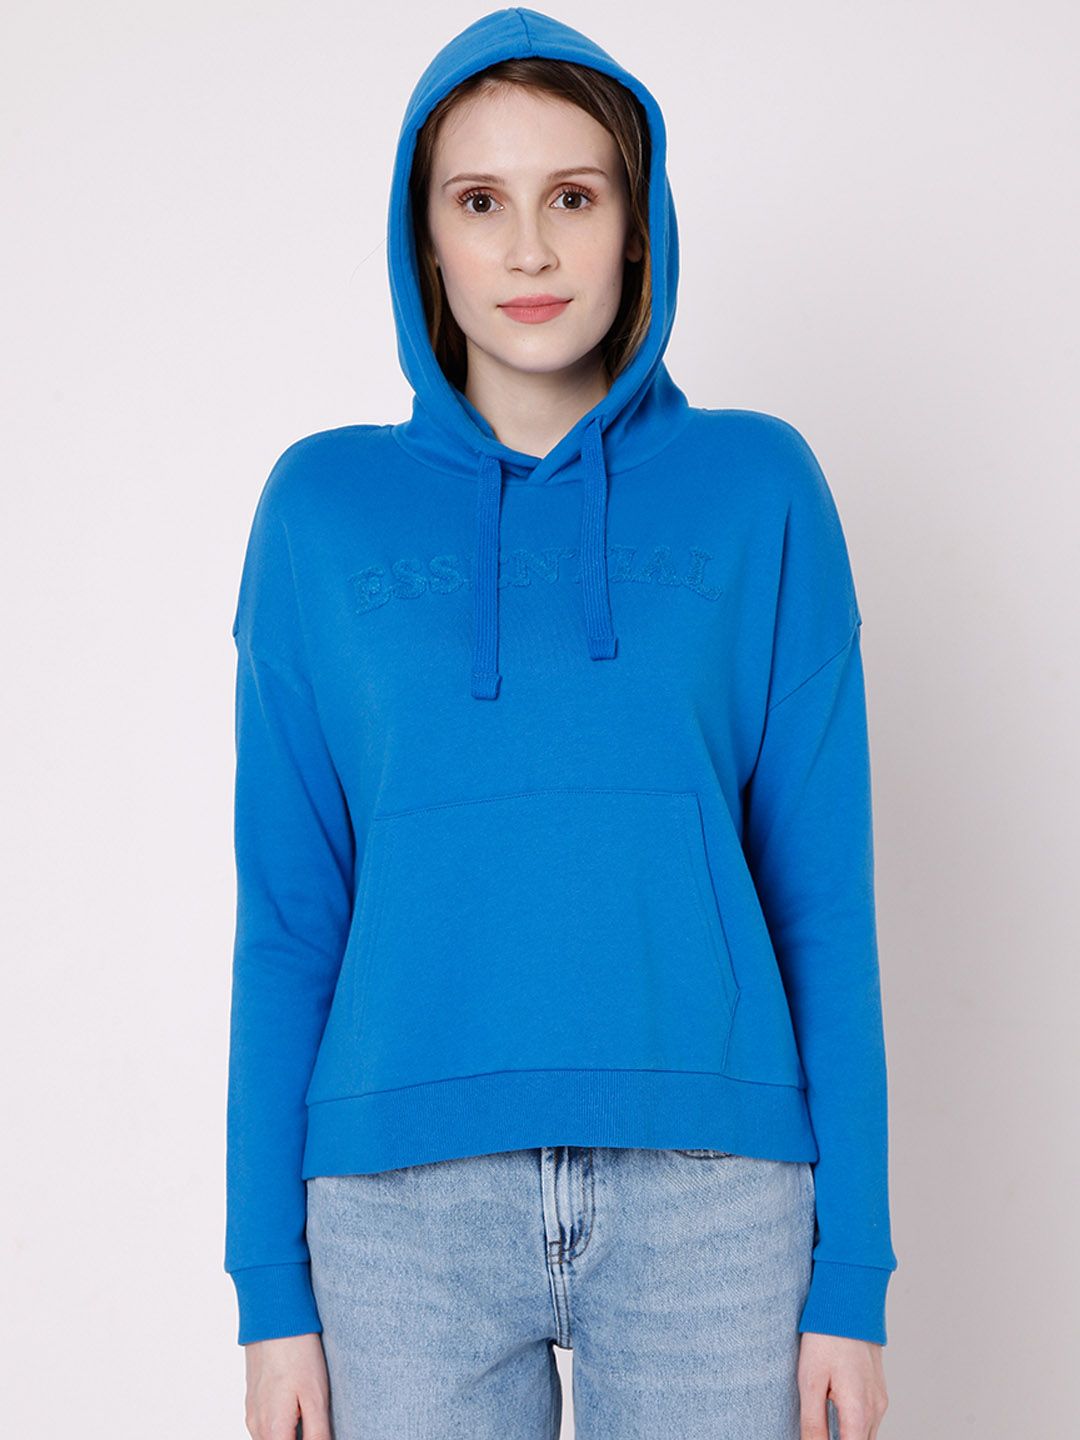 Vero Moda Women Blue Solid Hooded Sweatshirt Price in India